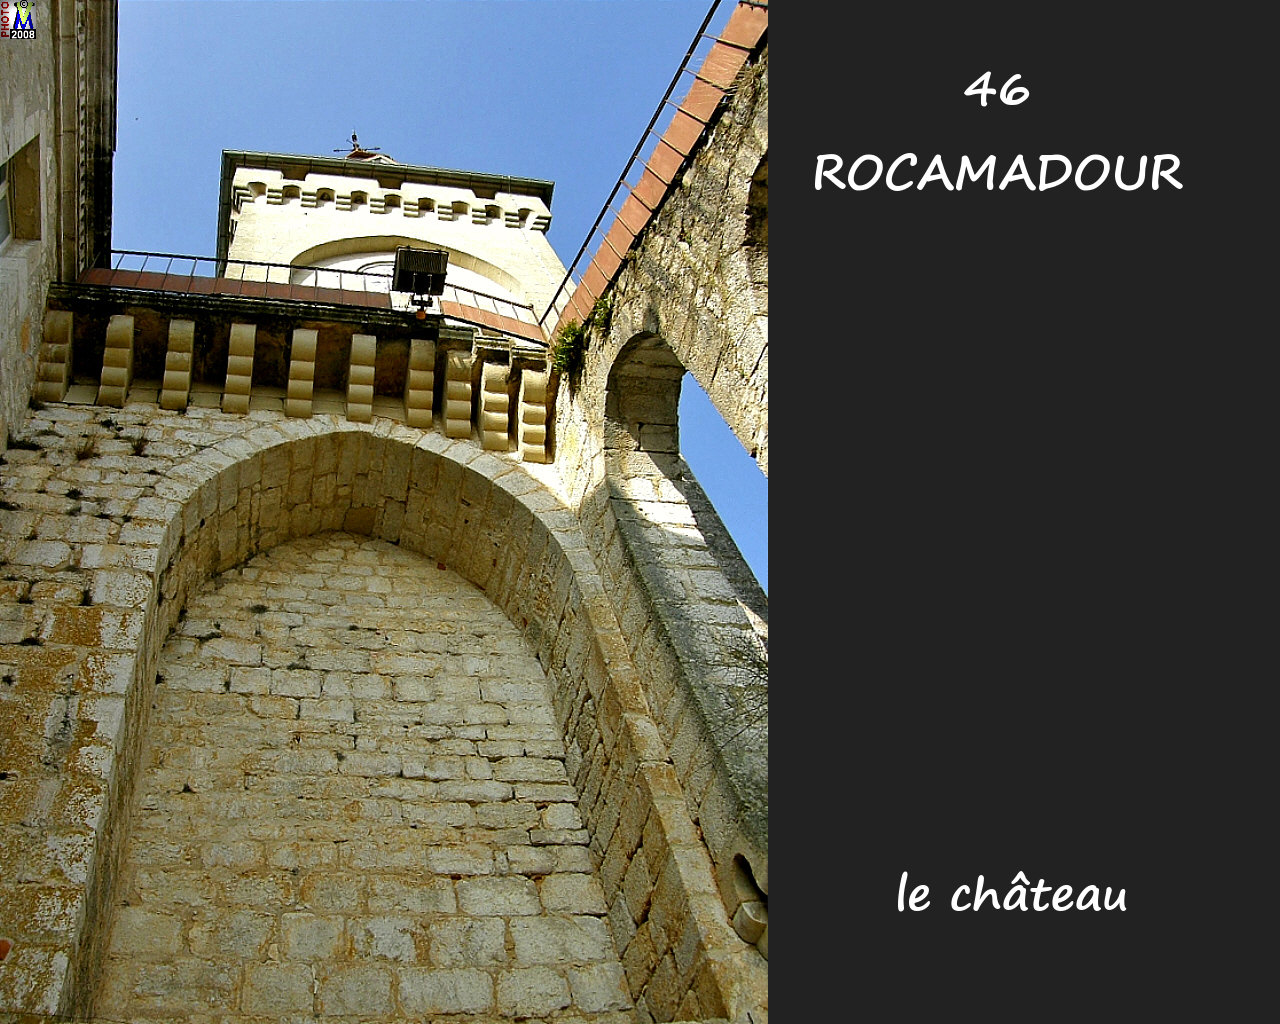 46ROCAMADOUR_chateau_120.jpg